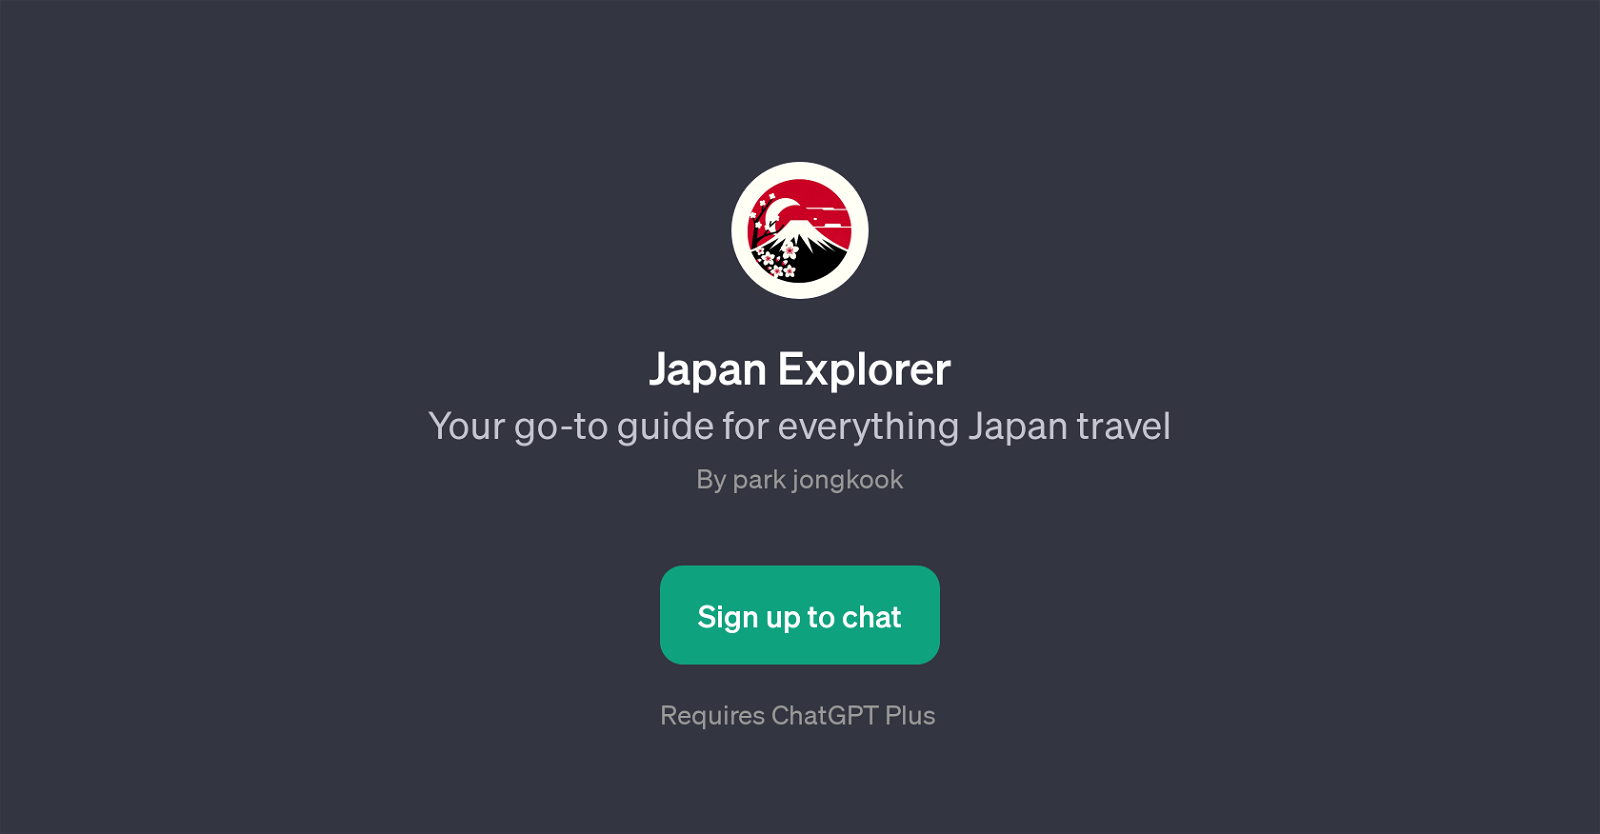 Japan Explorer website